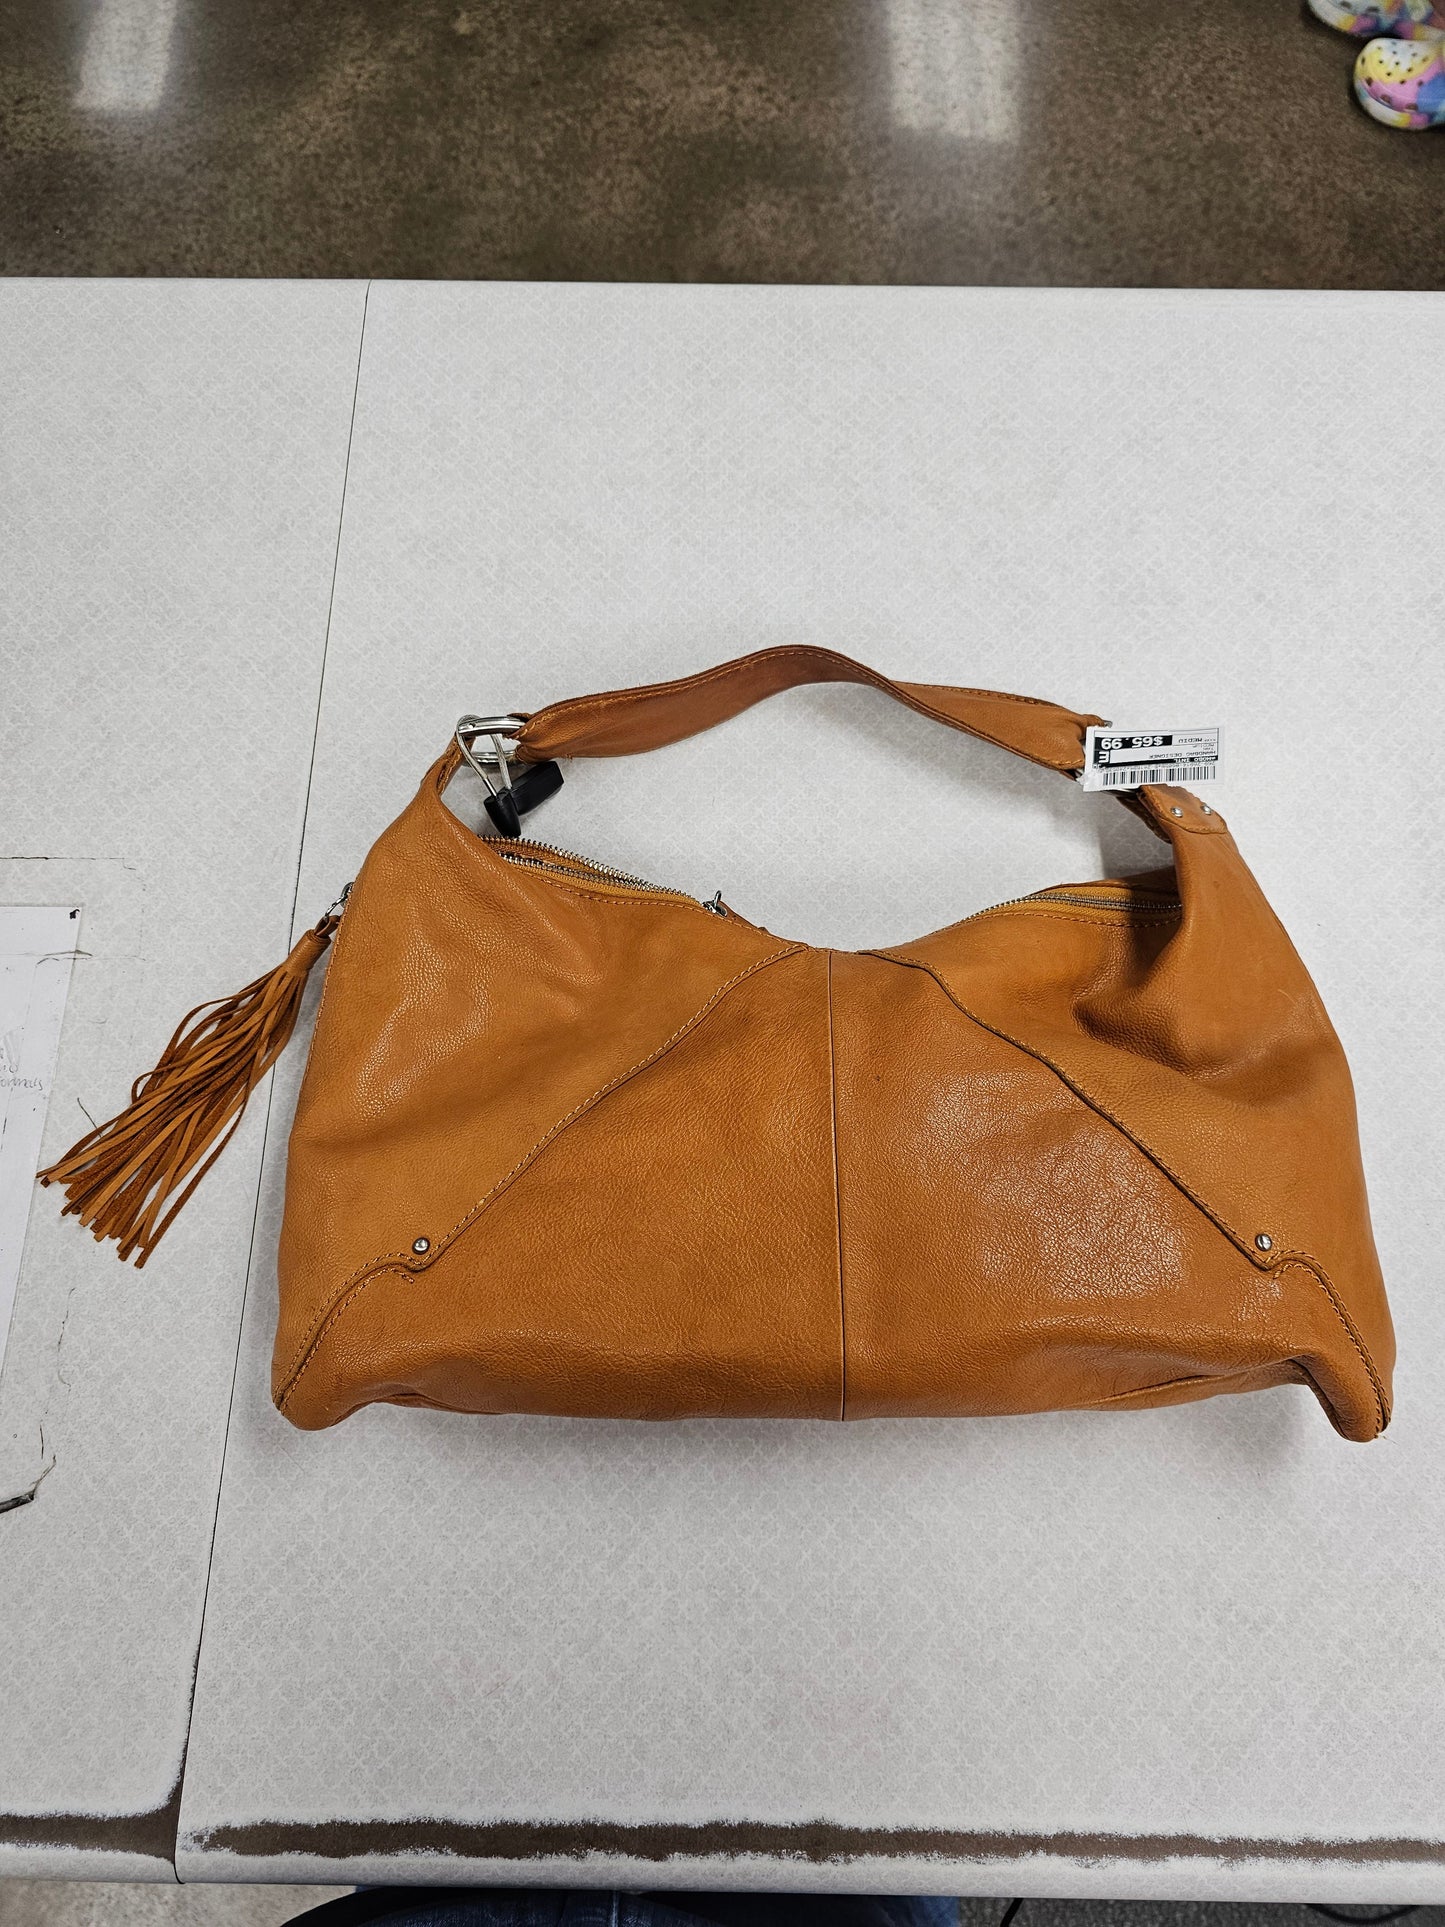 Tan Handbag Designer Hobo Intl, Size Medium